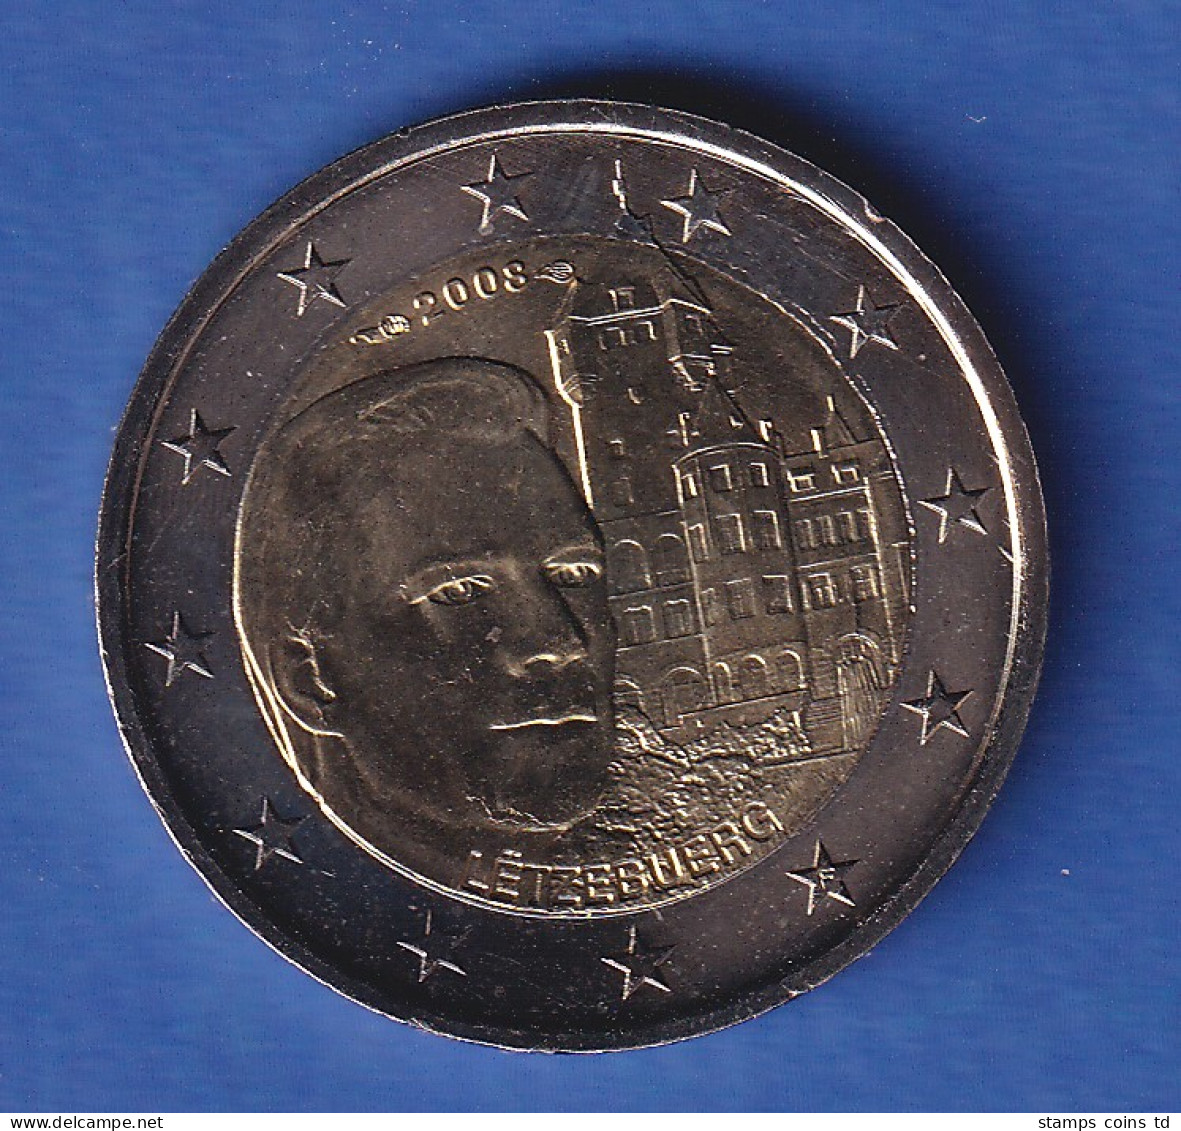 Luxemburg 2008 2-Euro-Sondermünze Großherzog Henri Bankfr. Unzirk. - Luxembourg